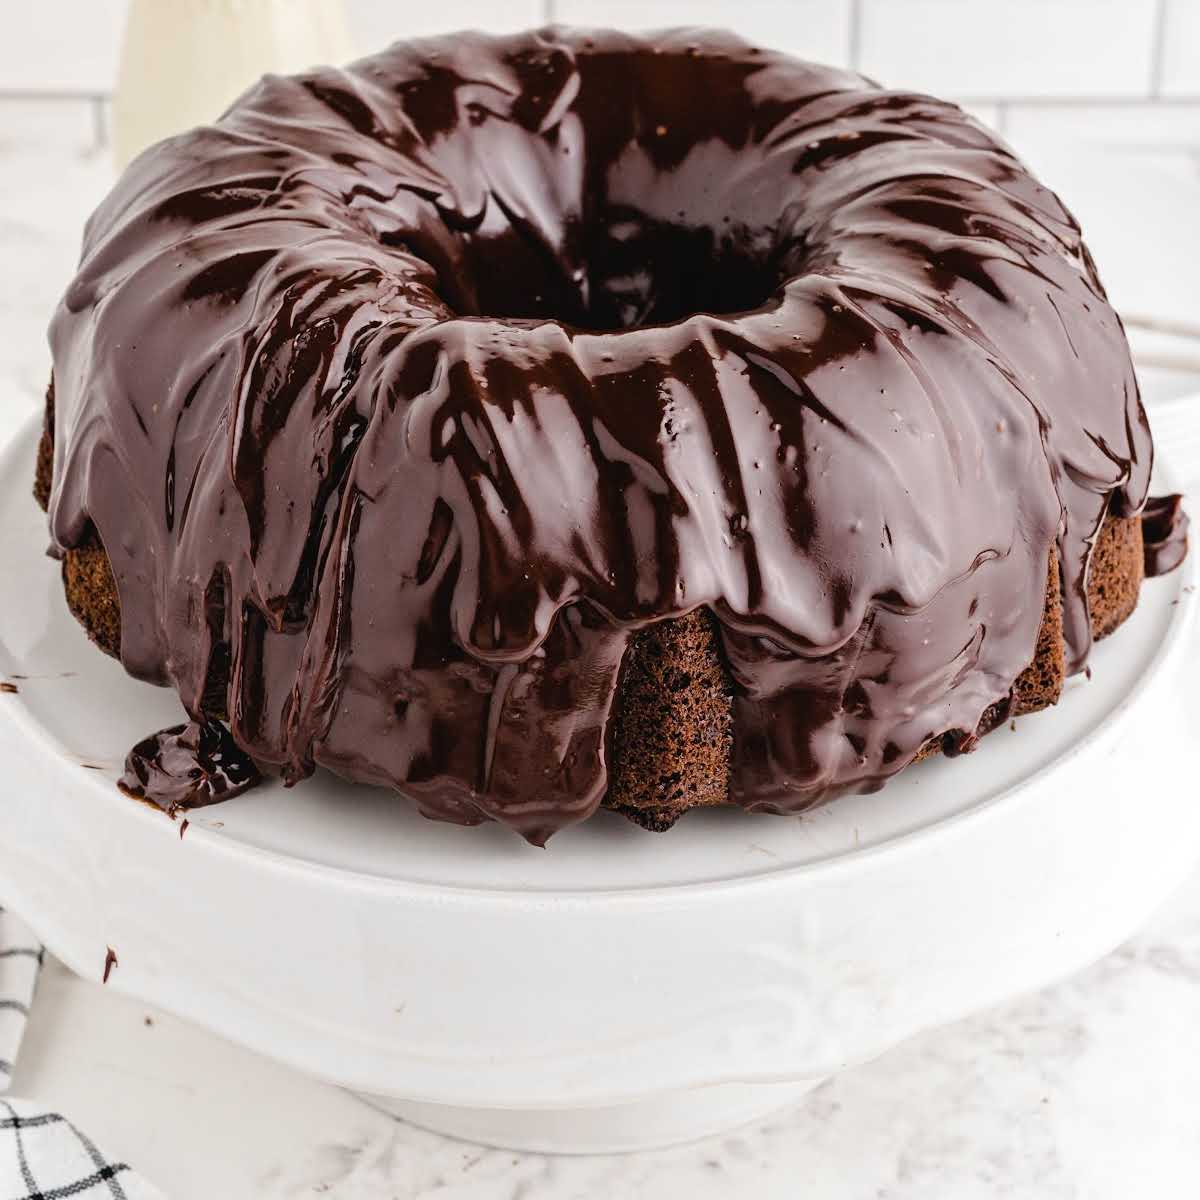 Nutella Layered Brownie Cake With Hazelnuts – avocadoandbrownies